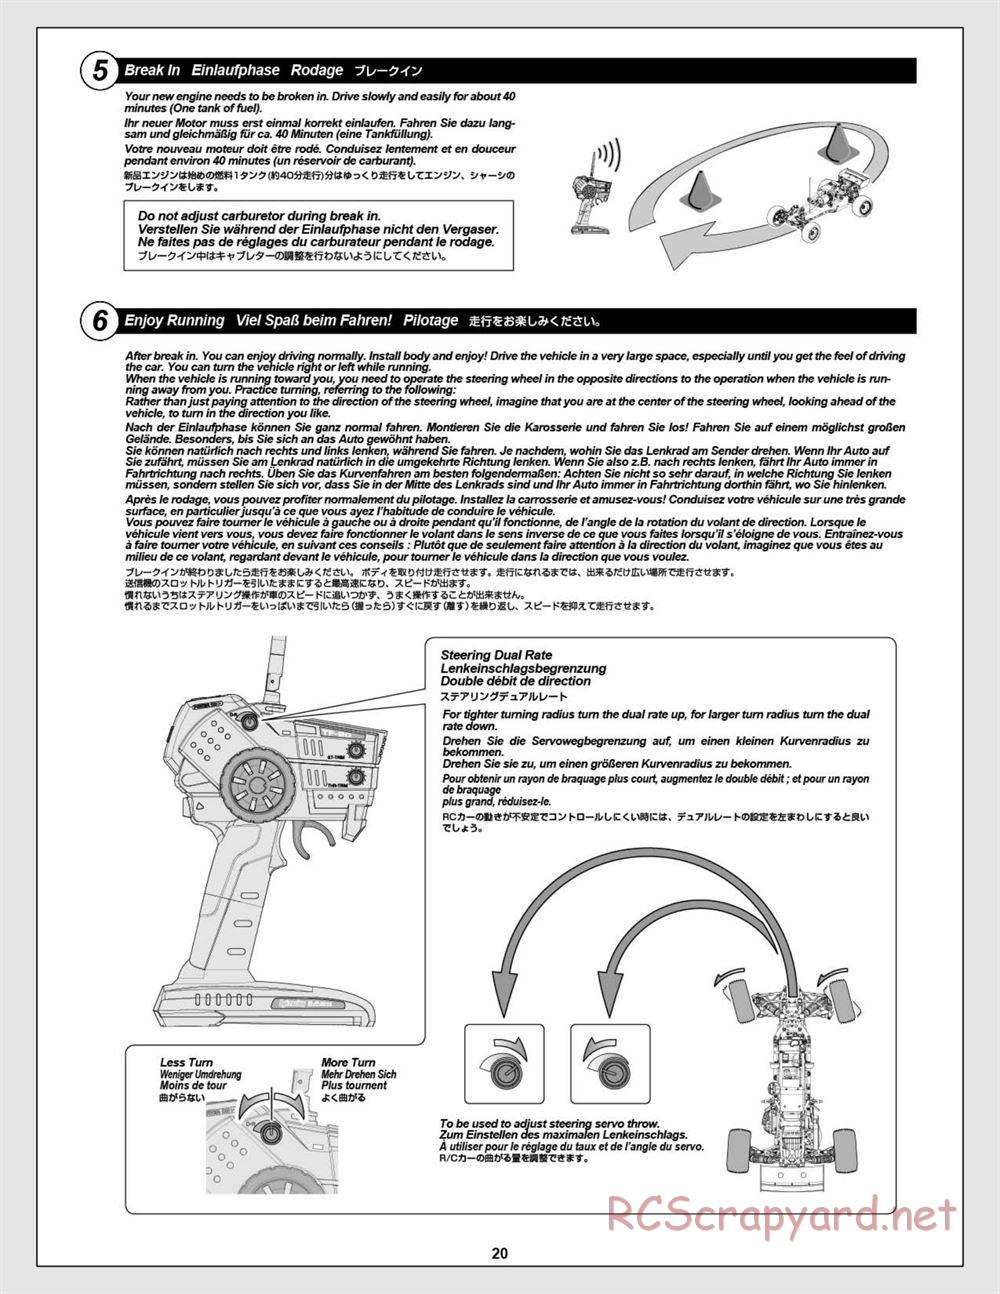 HPI - Baja 5B 2.0 RTR - Manual - Page 20